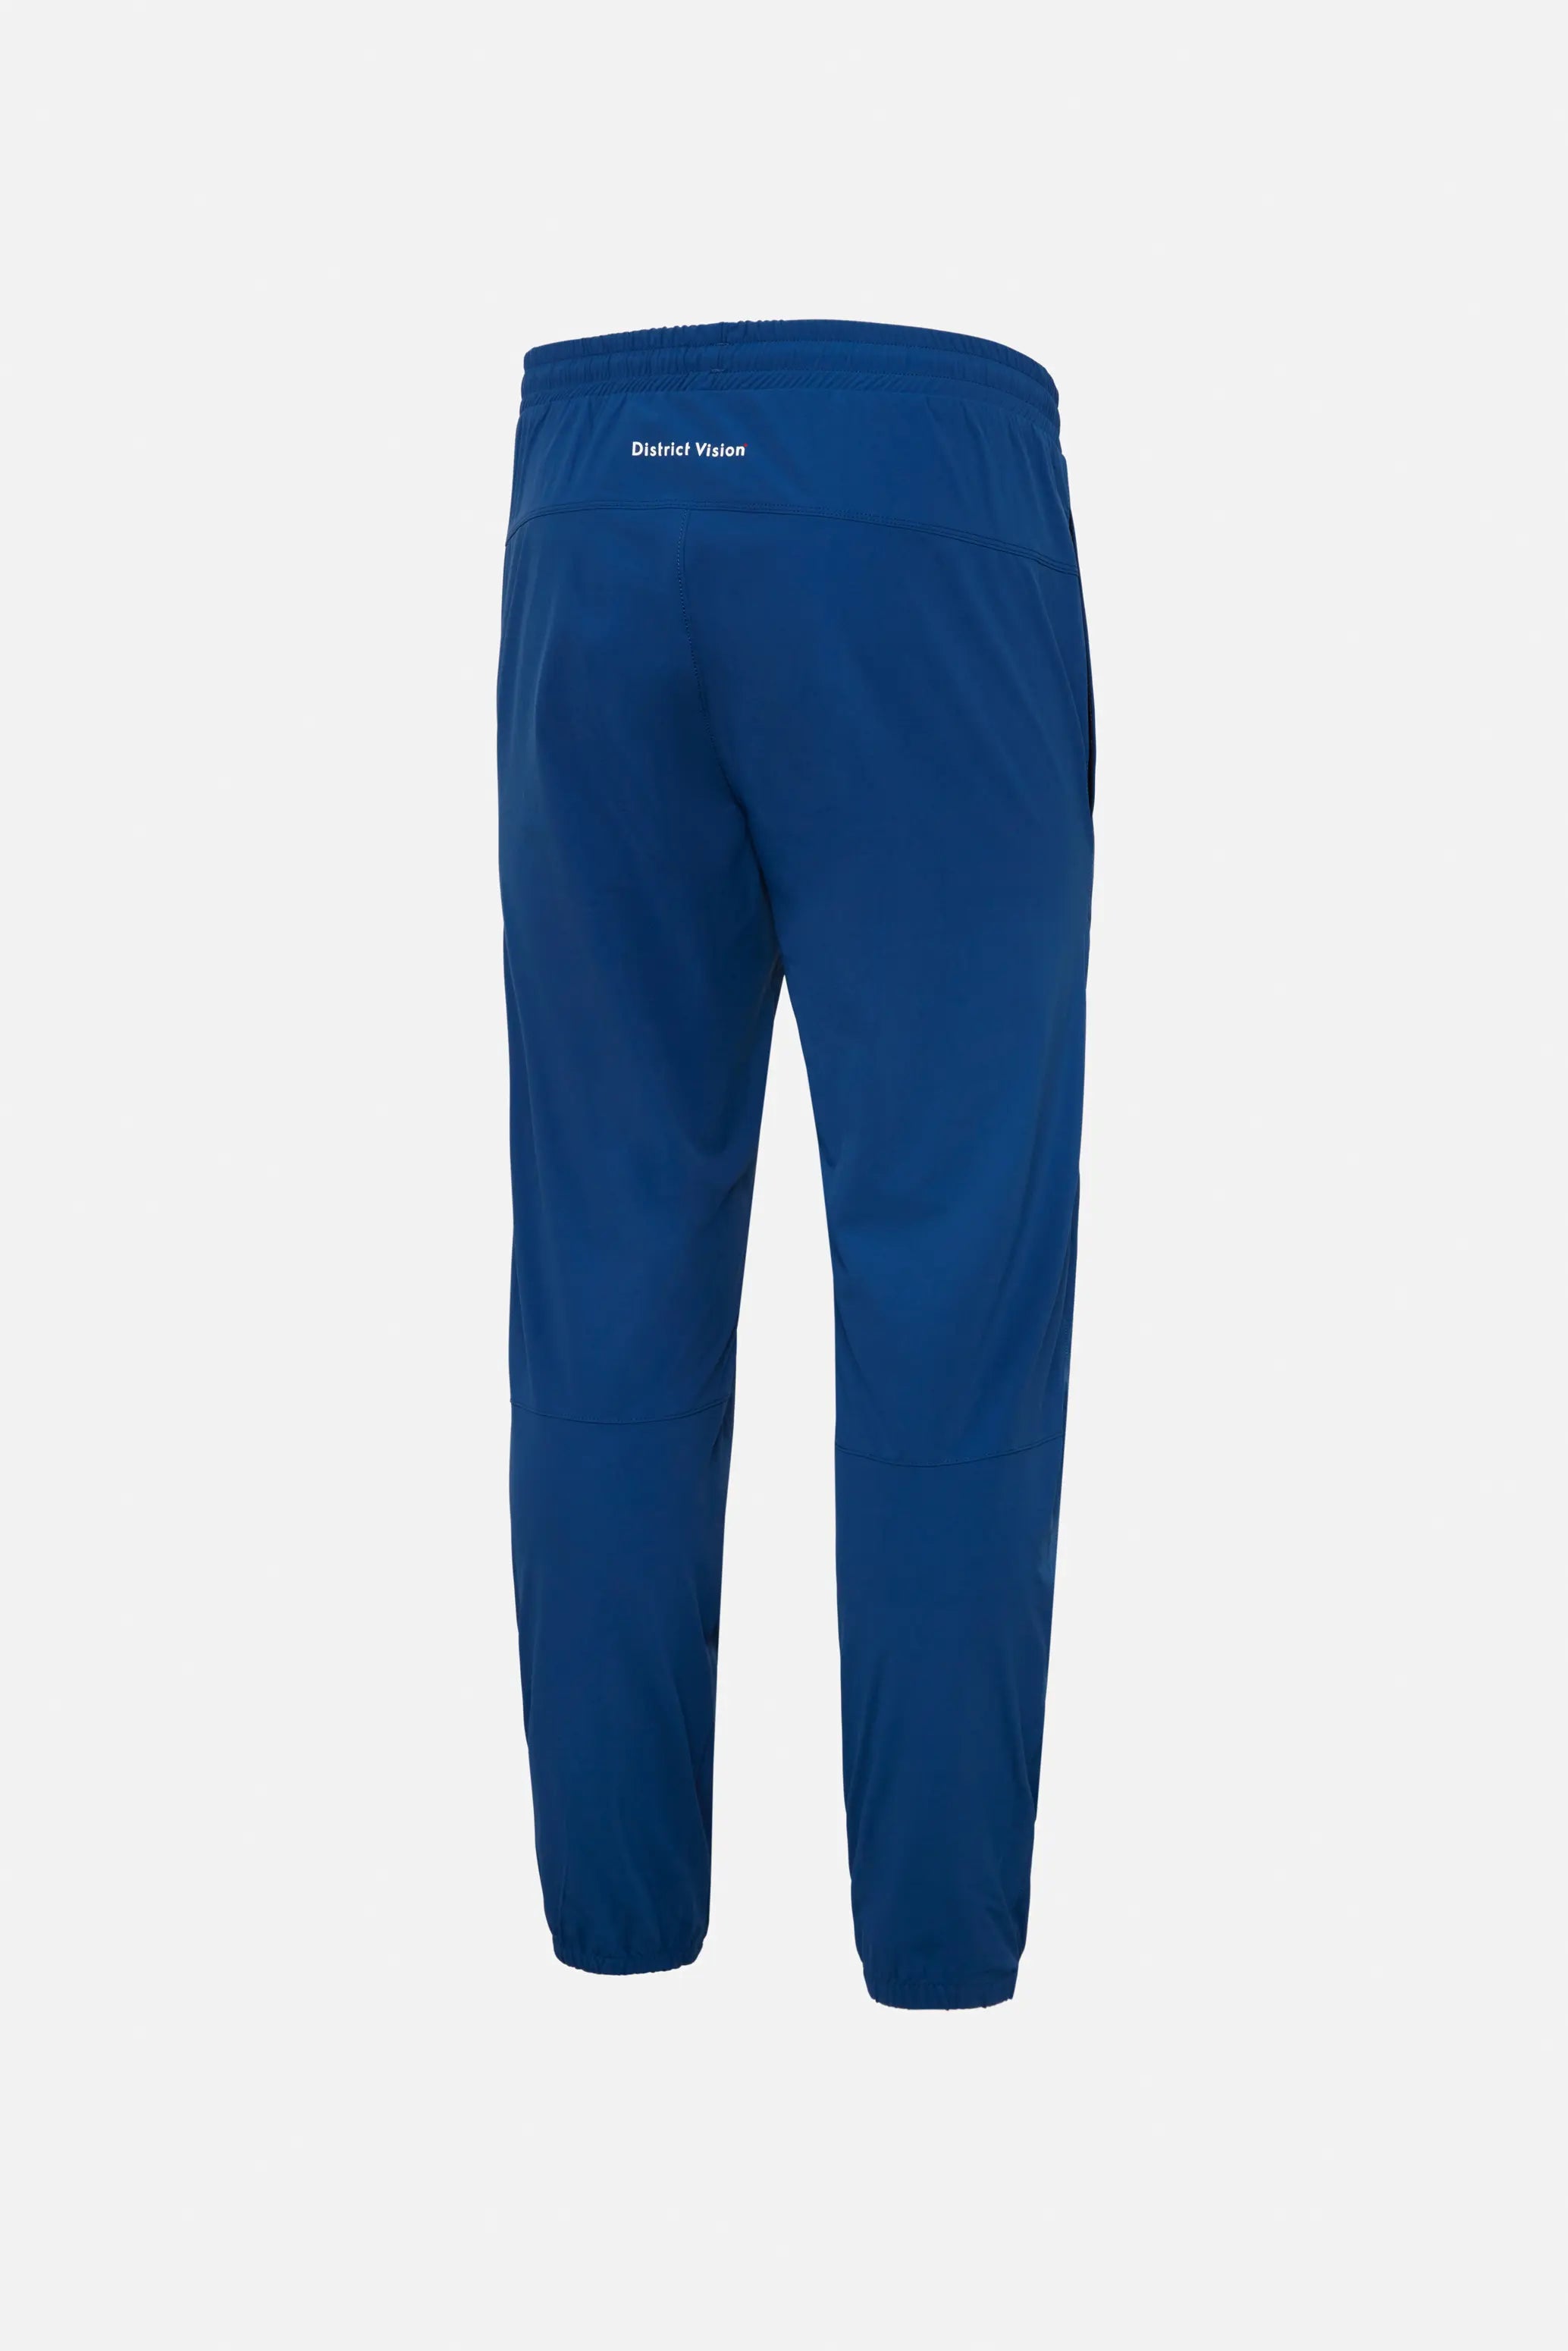 Alcis Navy Blue Running Track Pants - Buy Alcis Navy Blue Running Track  Pants online in India